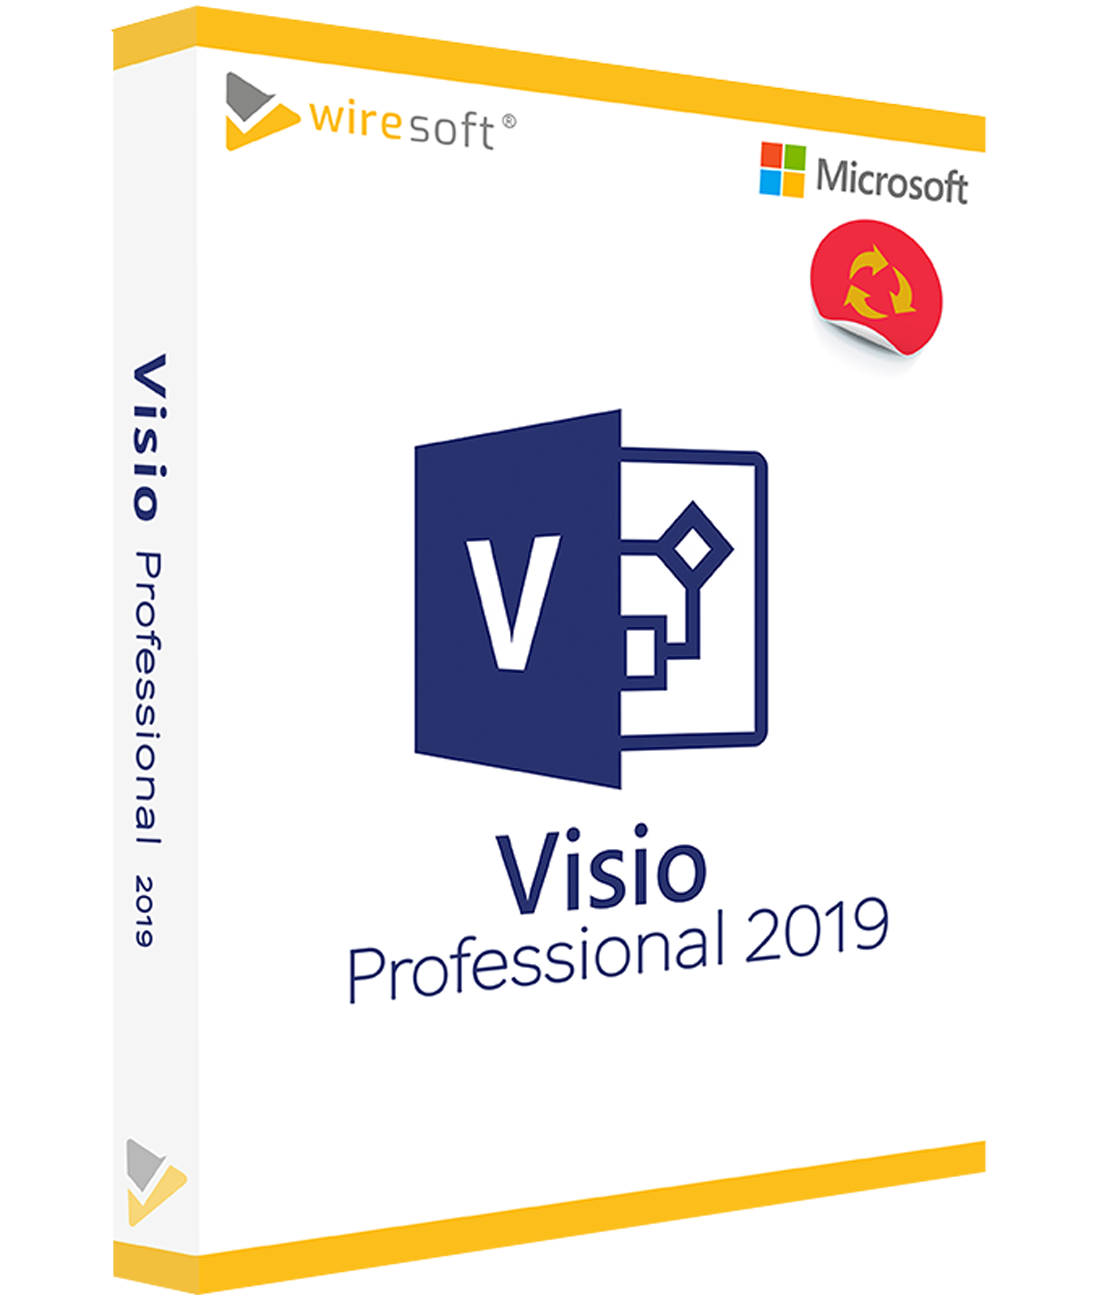 visio download 2019 professional